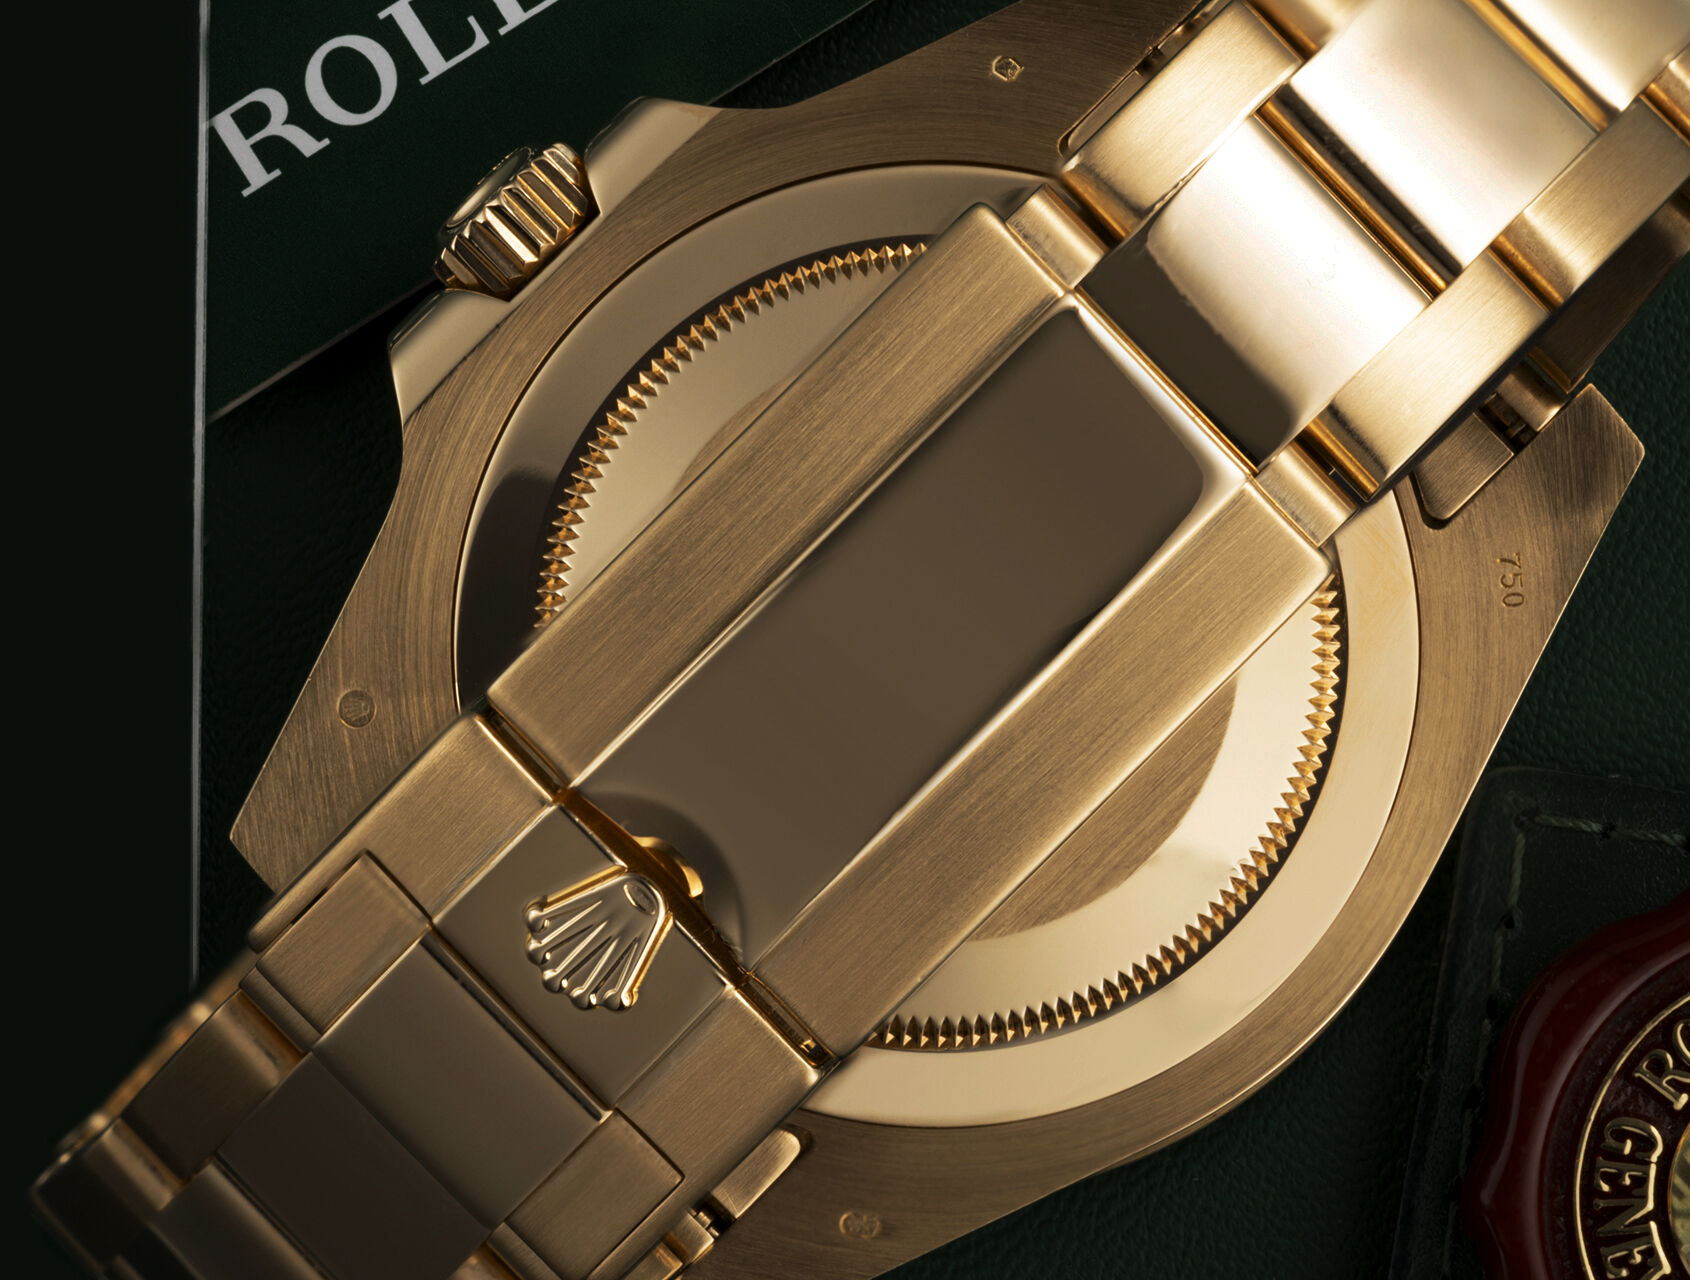 ref 116718LN | 116718LN - Green Dial | Rolex GMT-Master II